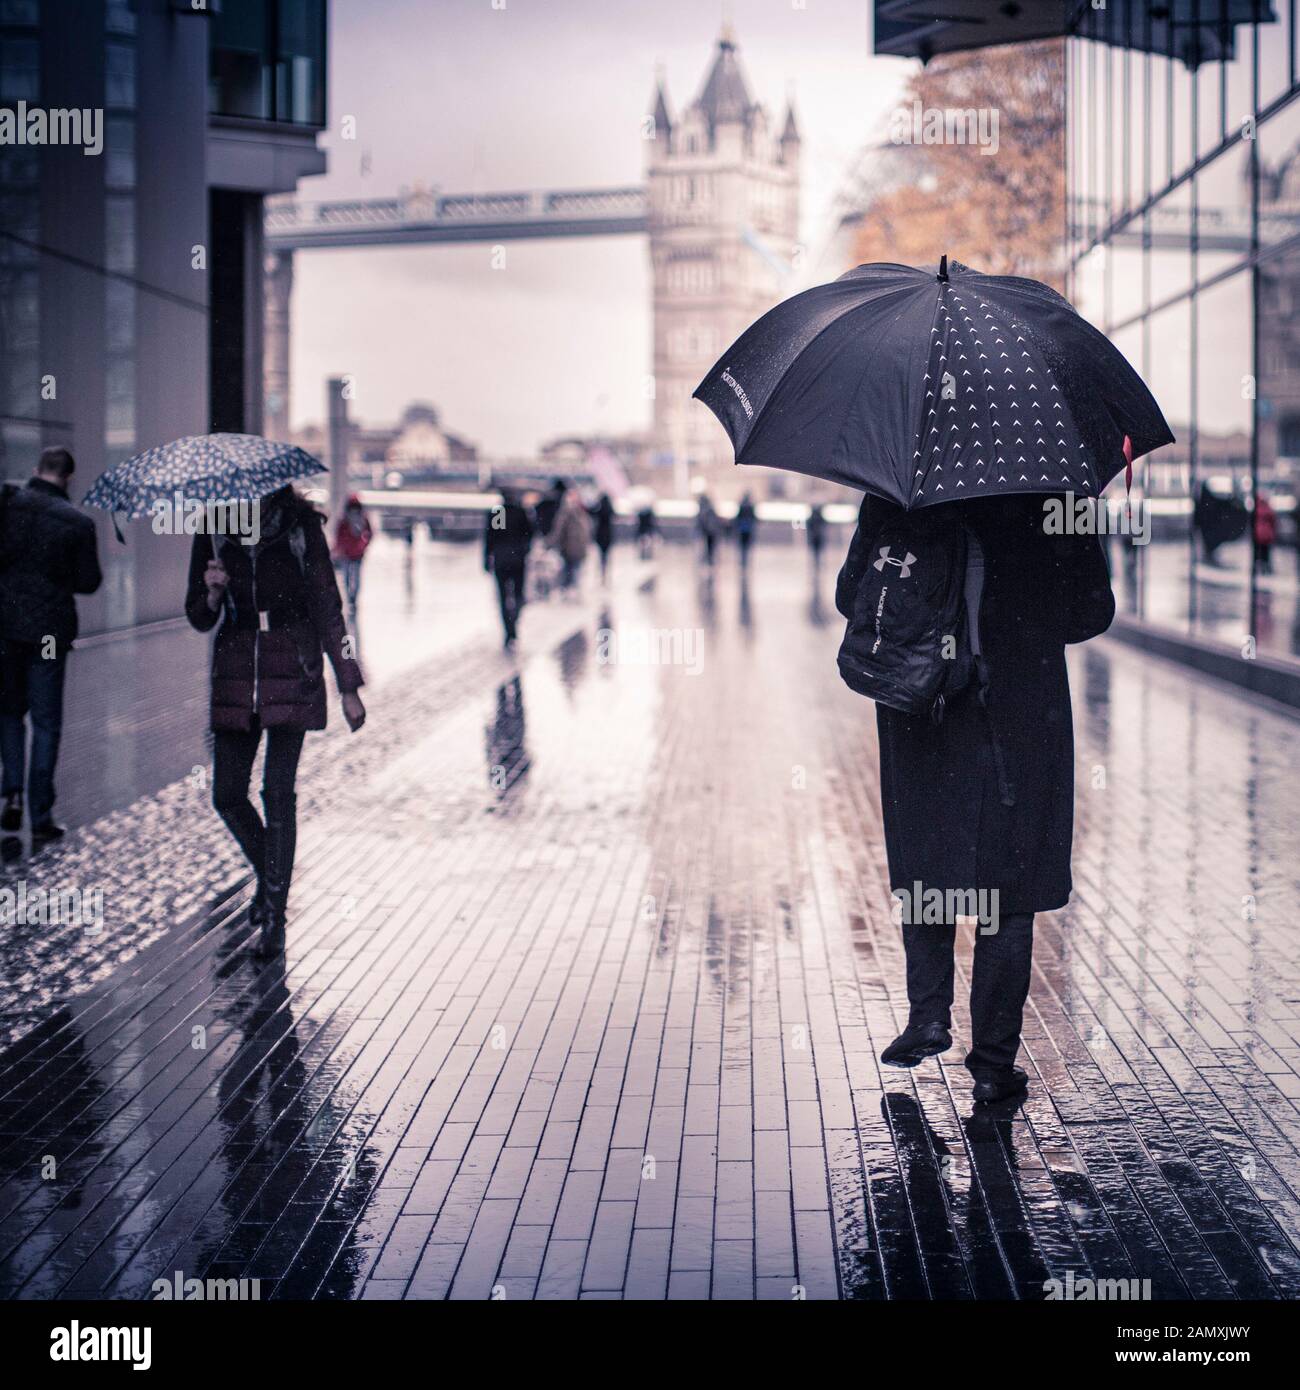 London commutors in heavy rain near Tower Bridge, London, UK  brave the weather and shelter under umbrellas Stock Photo